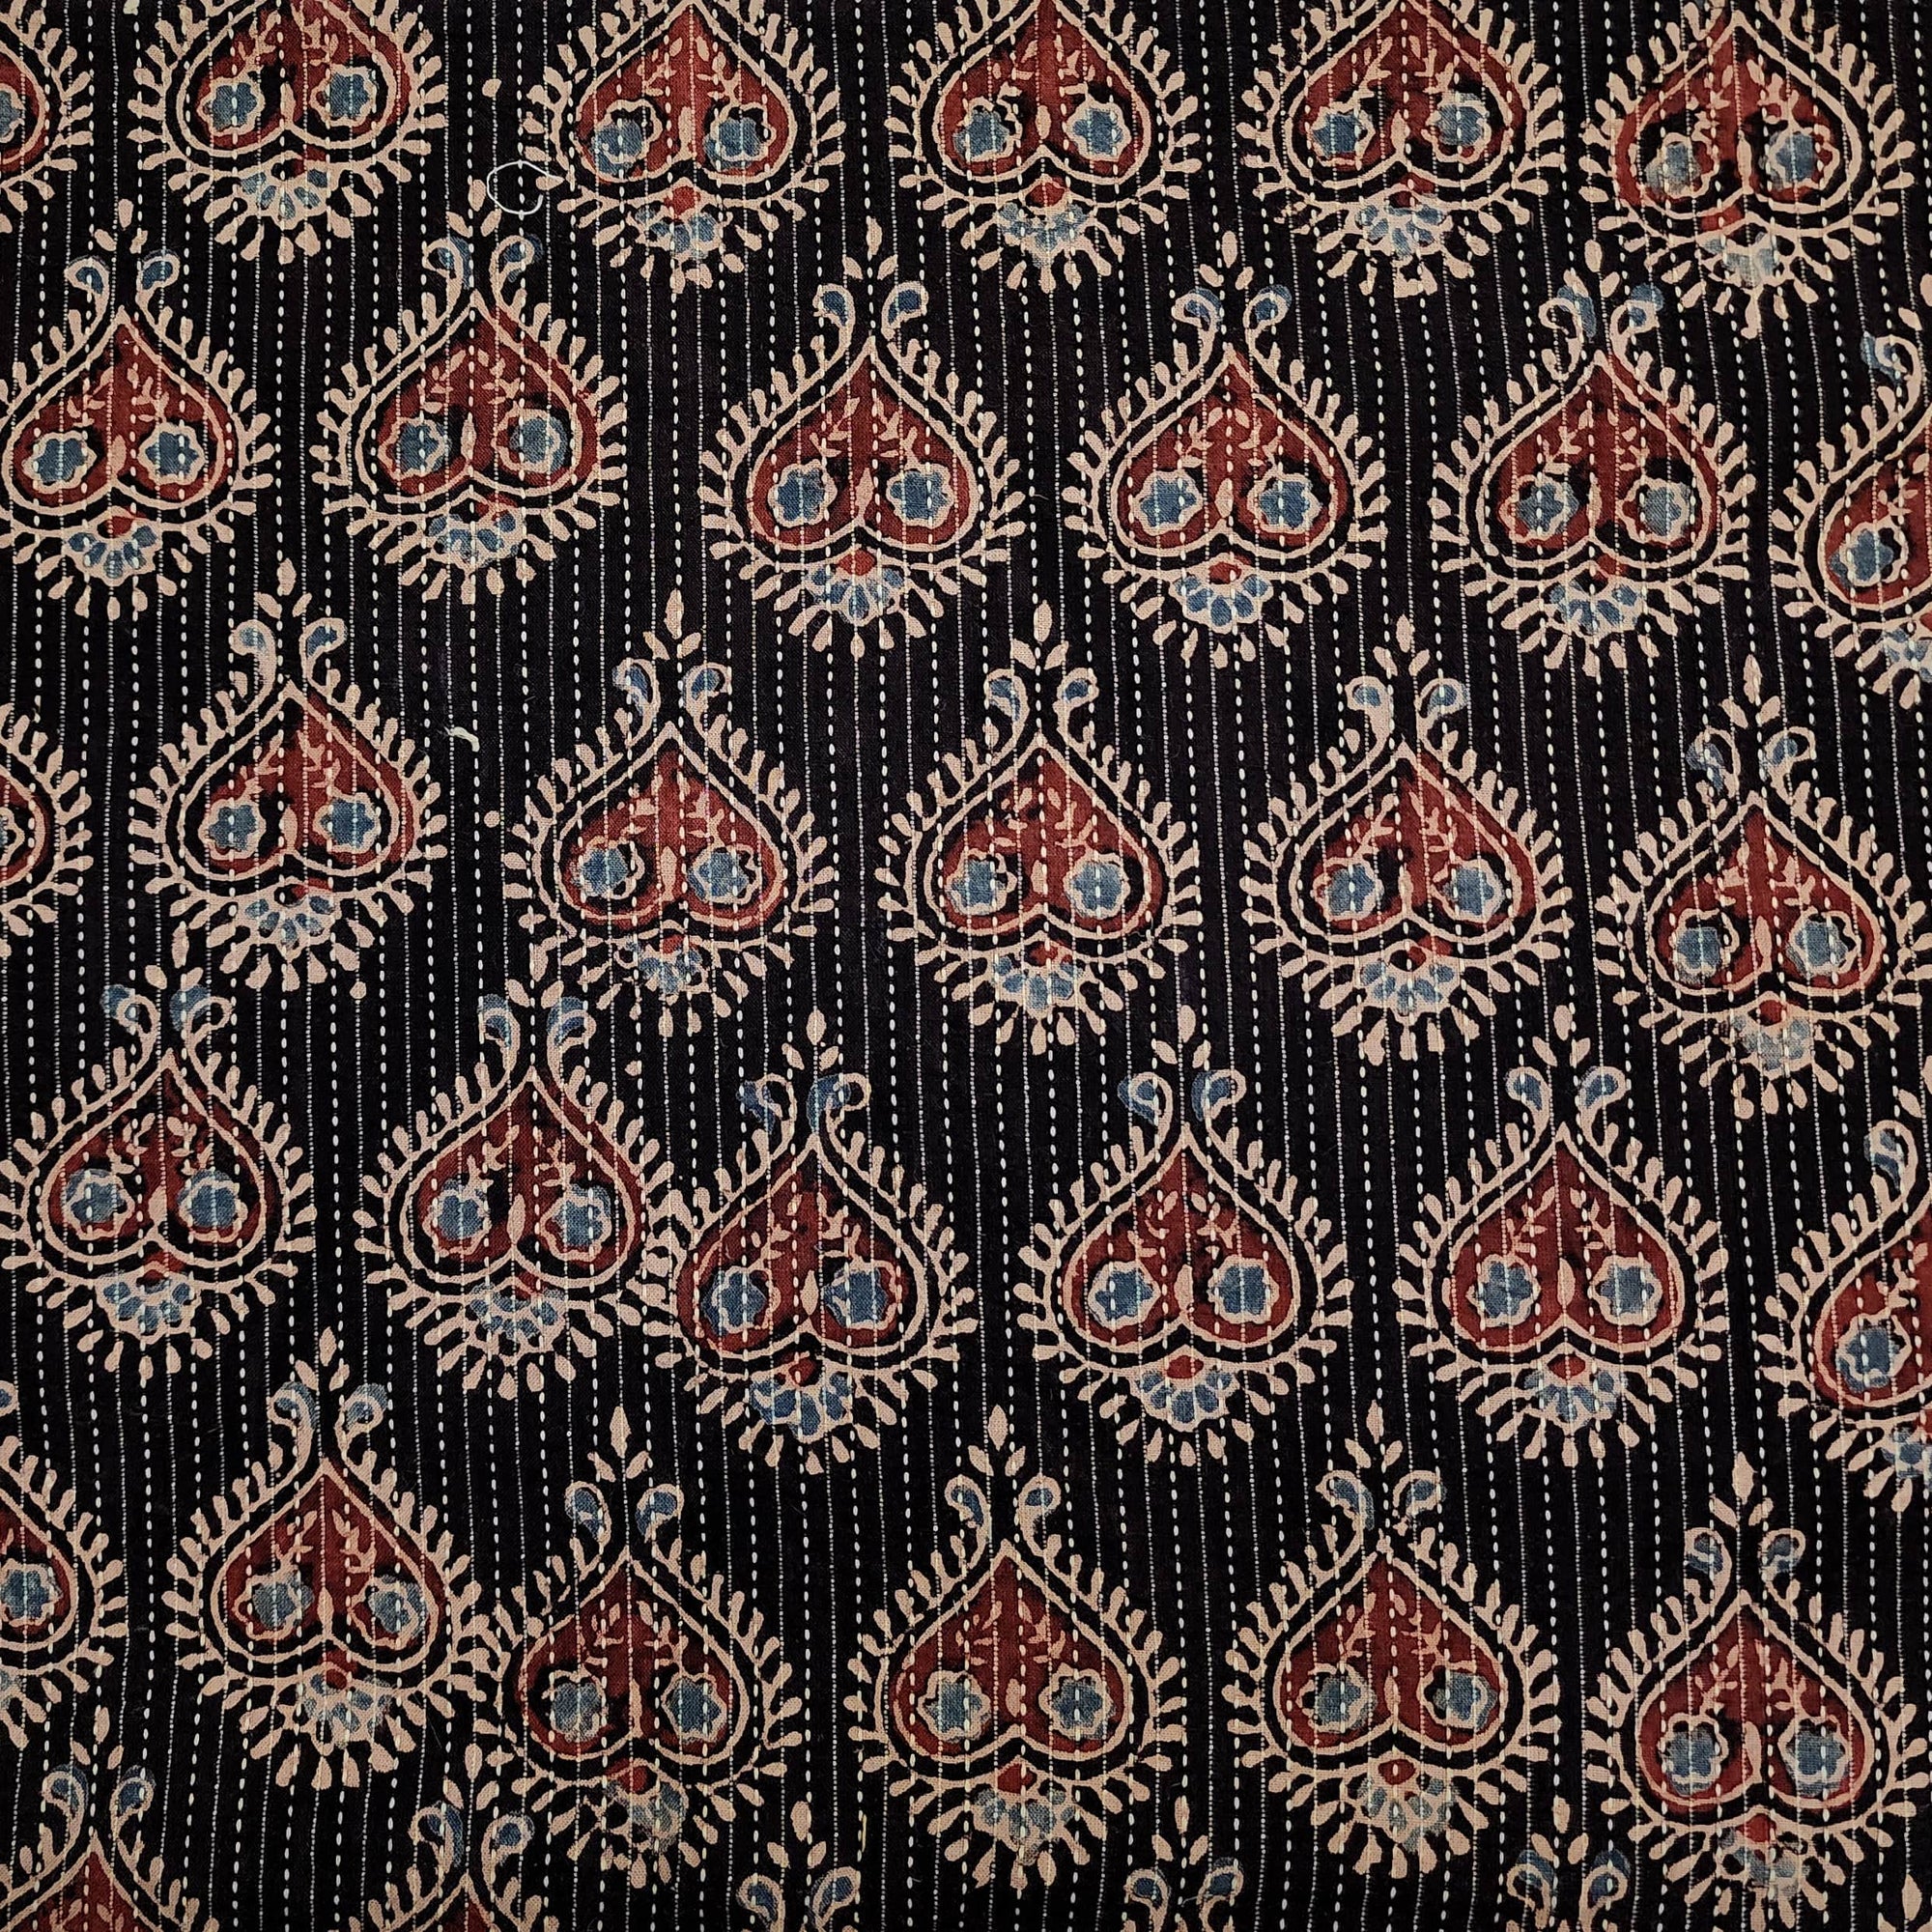 Black Cotton Duck Canvas Fabrics at Rs 150/meter, Sitapura, Jaipur